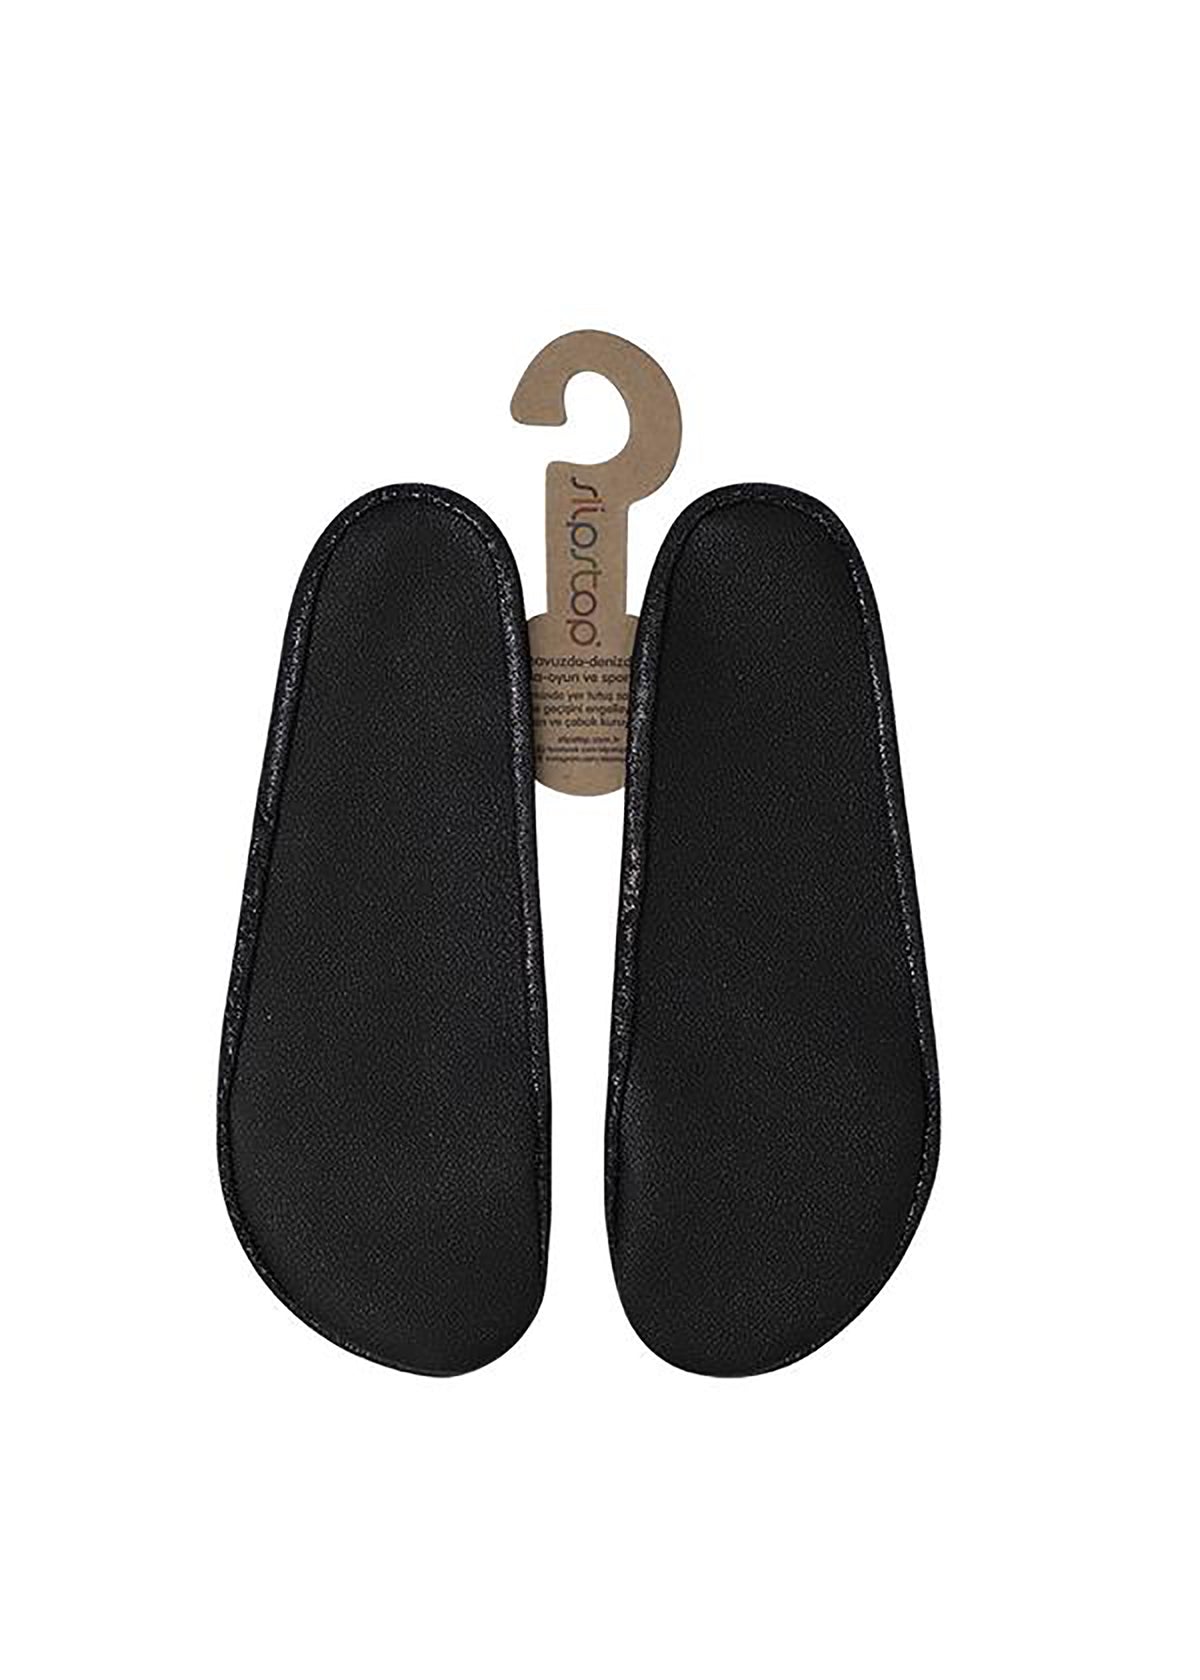 Adults' slippers - Black Gloss, shiny black